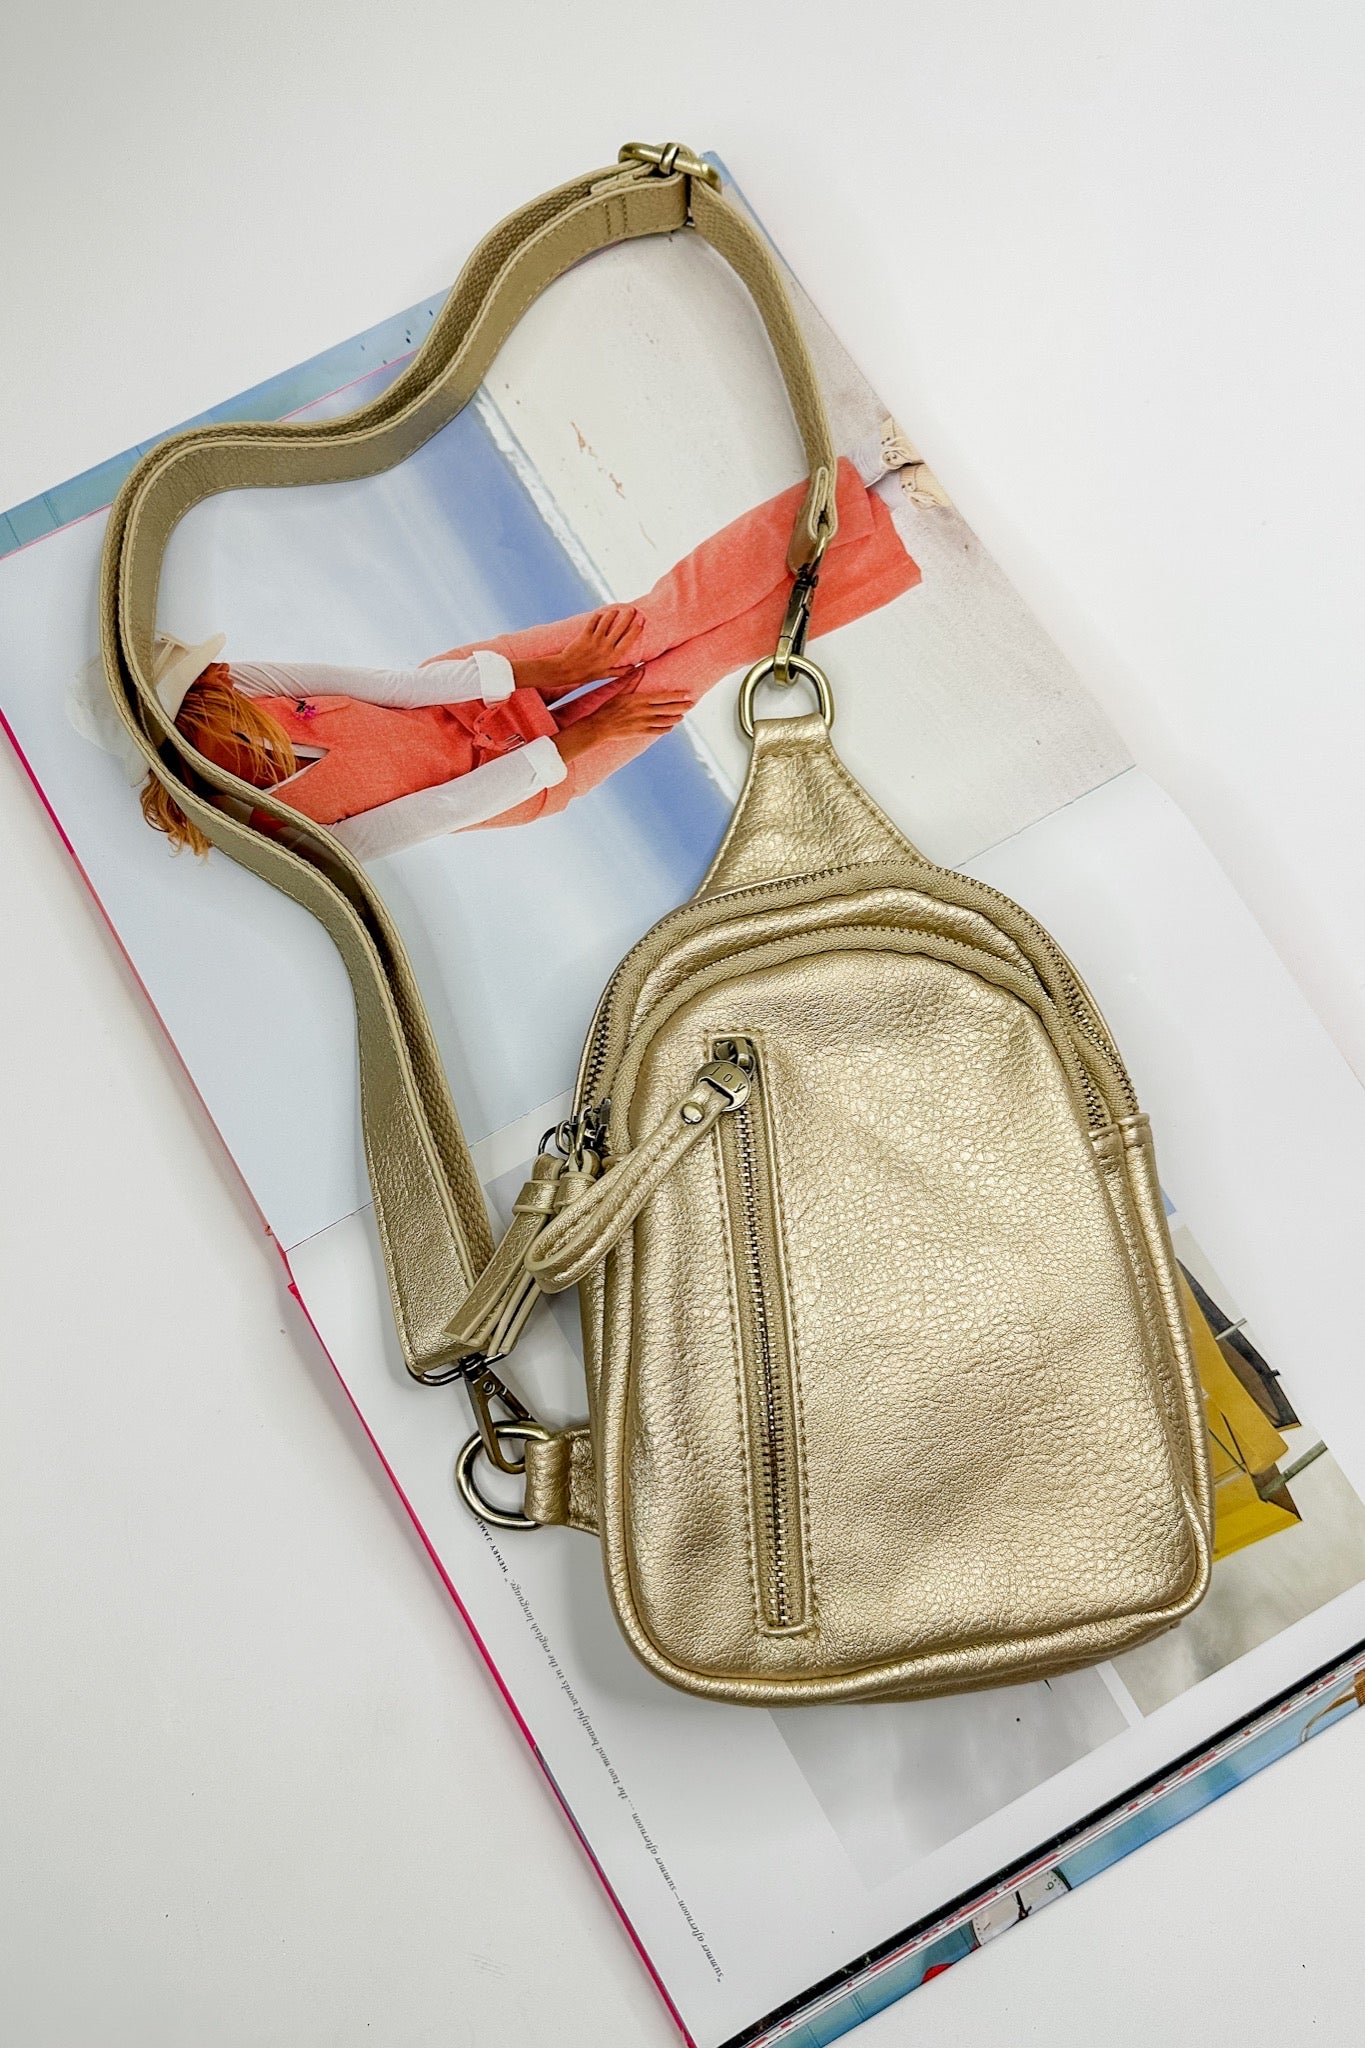 The Skyler Metallic Gold Sling Bag by Joy Susan